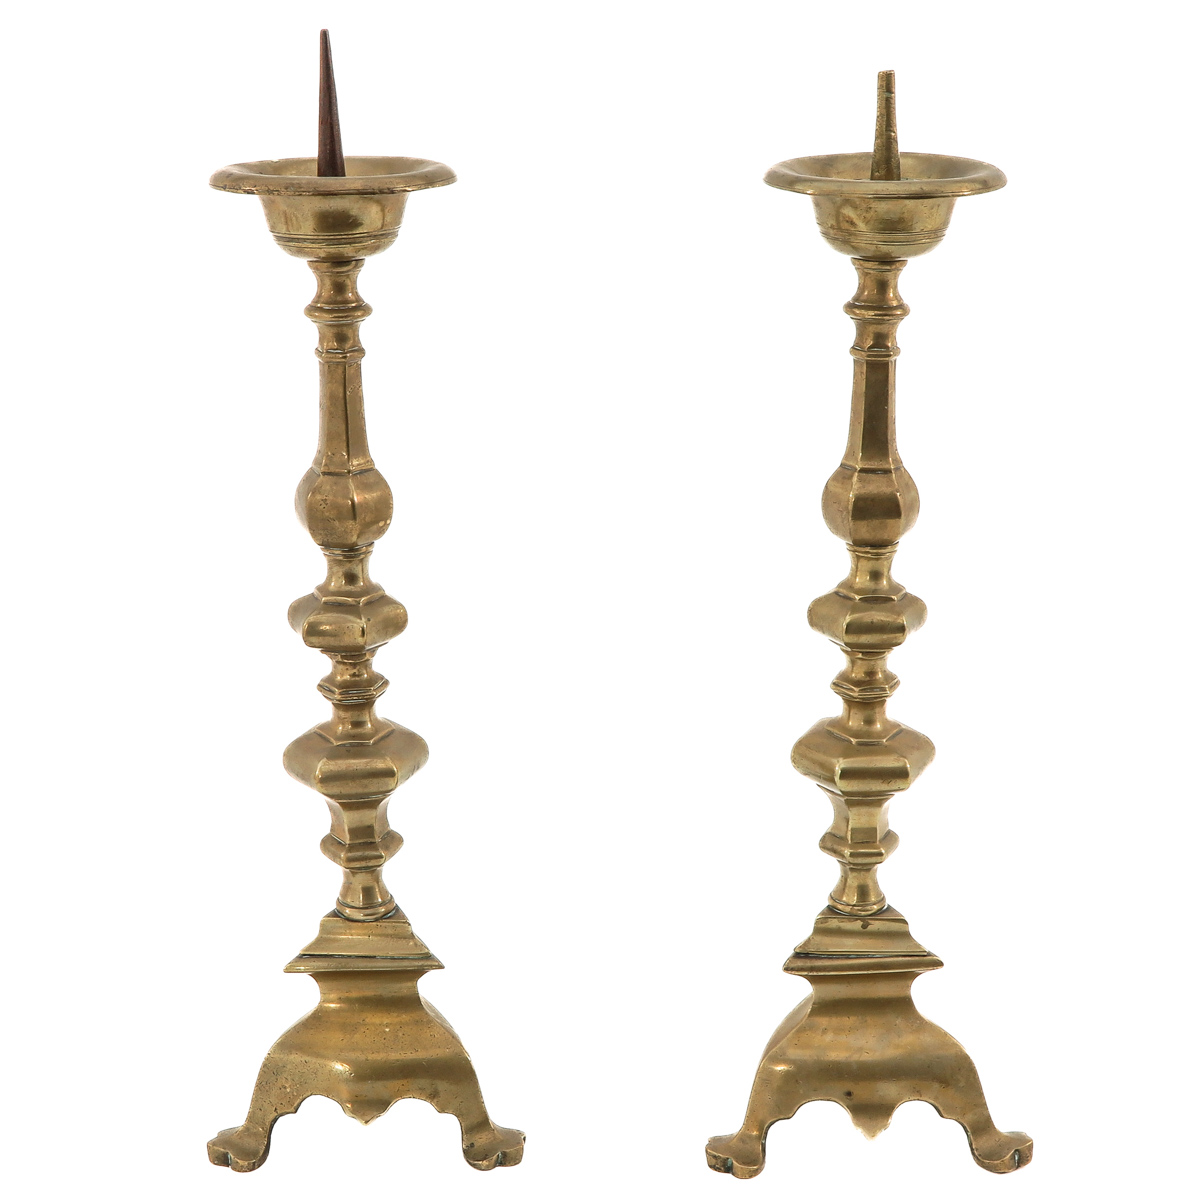 A Pair of Altar Candlesticks